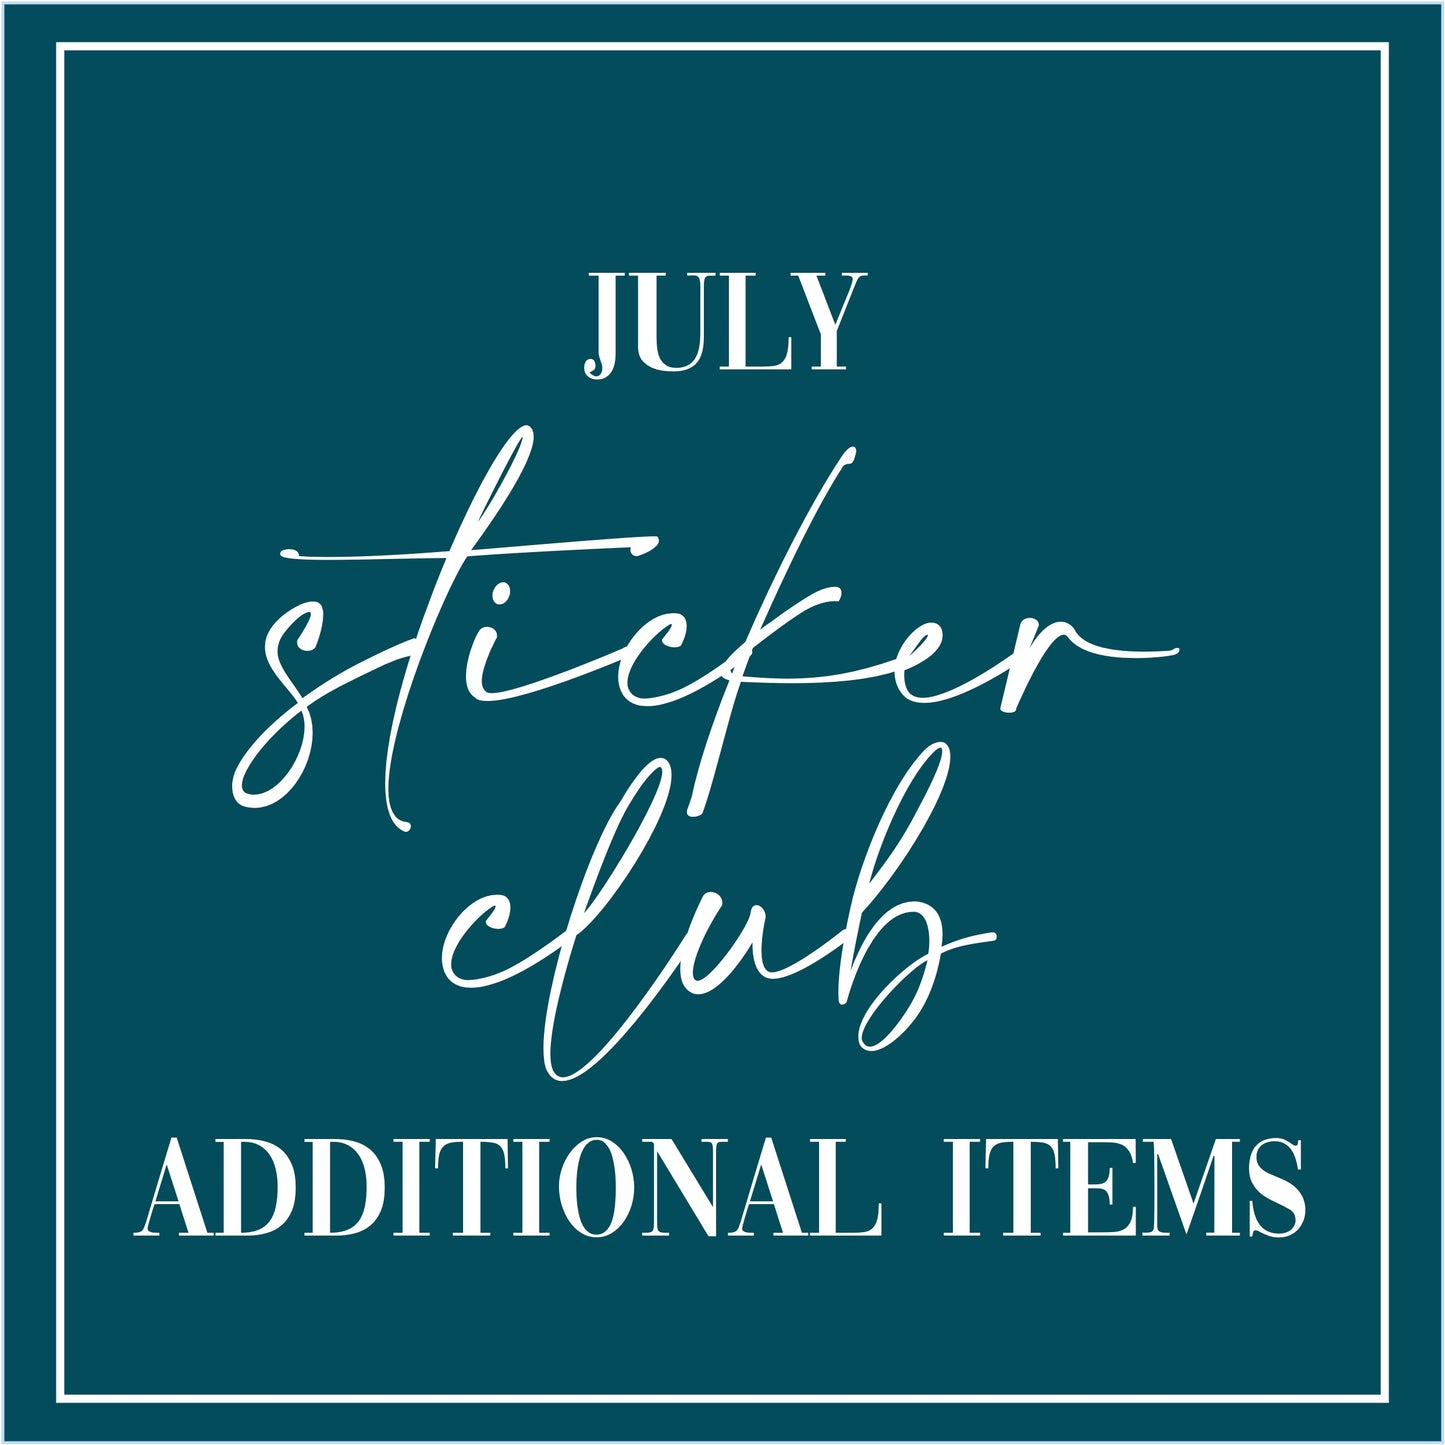 July - Sticker Club - Extra Single Items